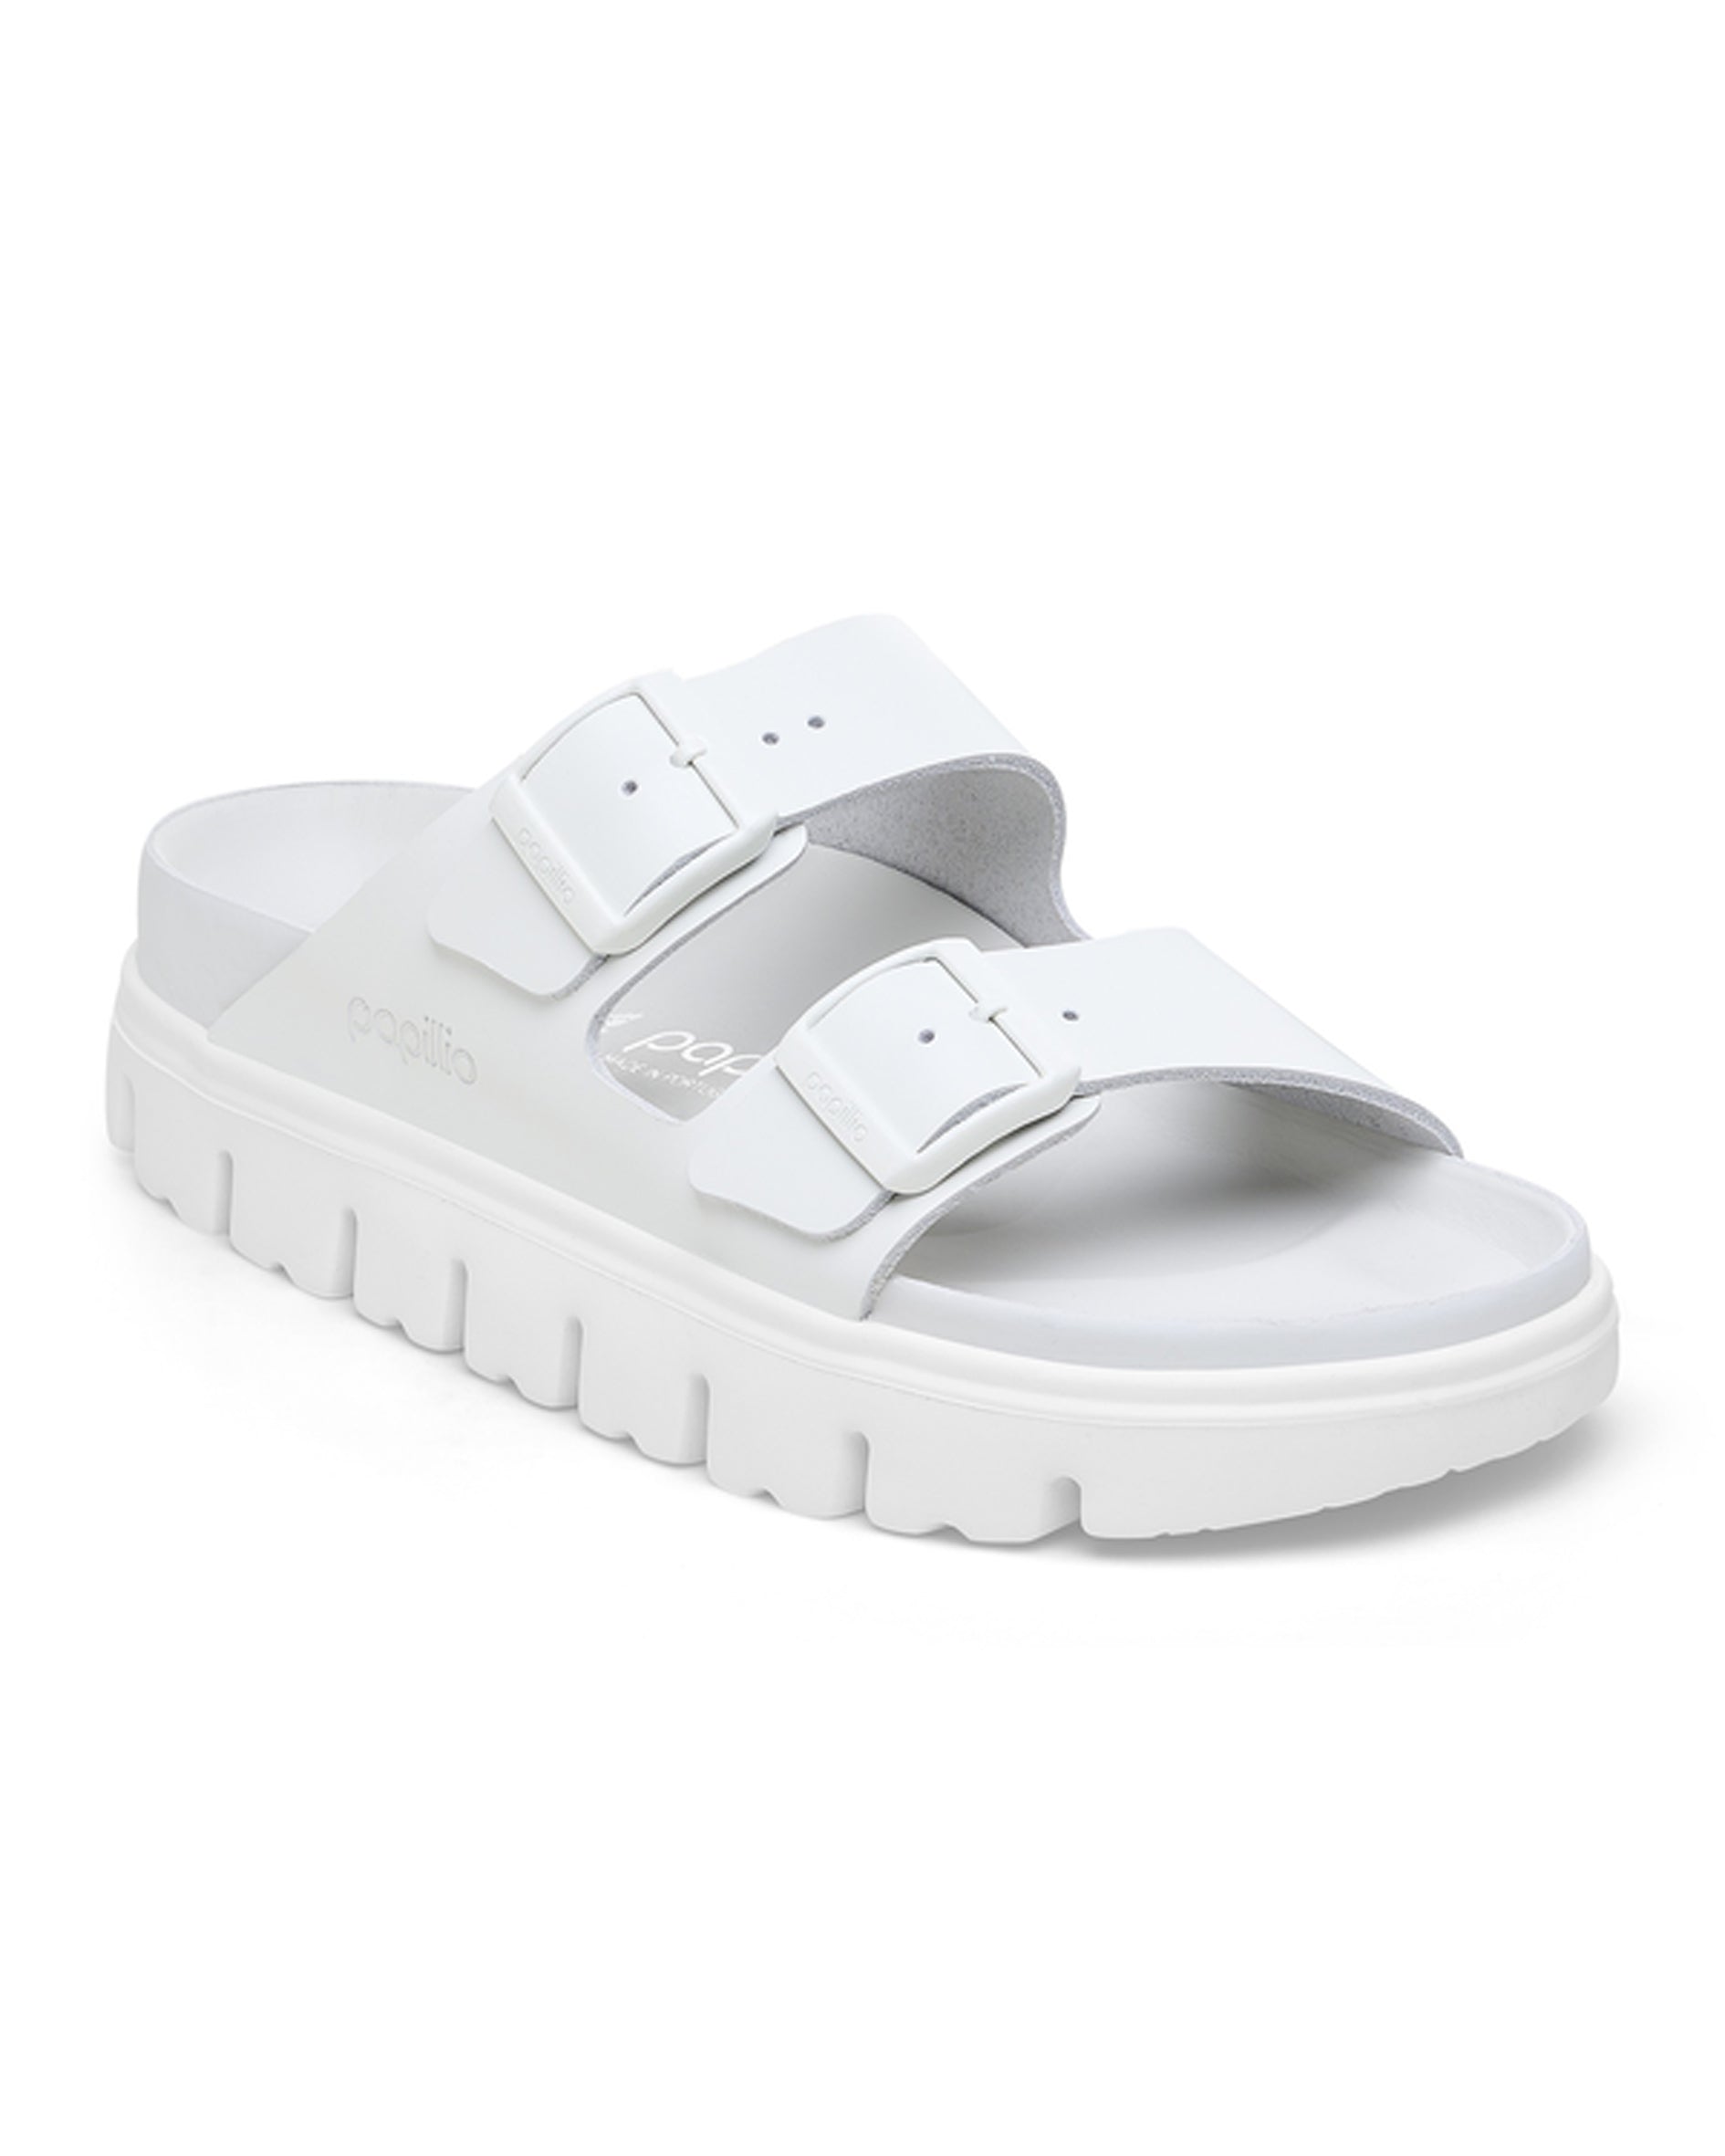 Arizona Chunky Exquisite White Leather Sandals